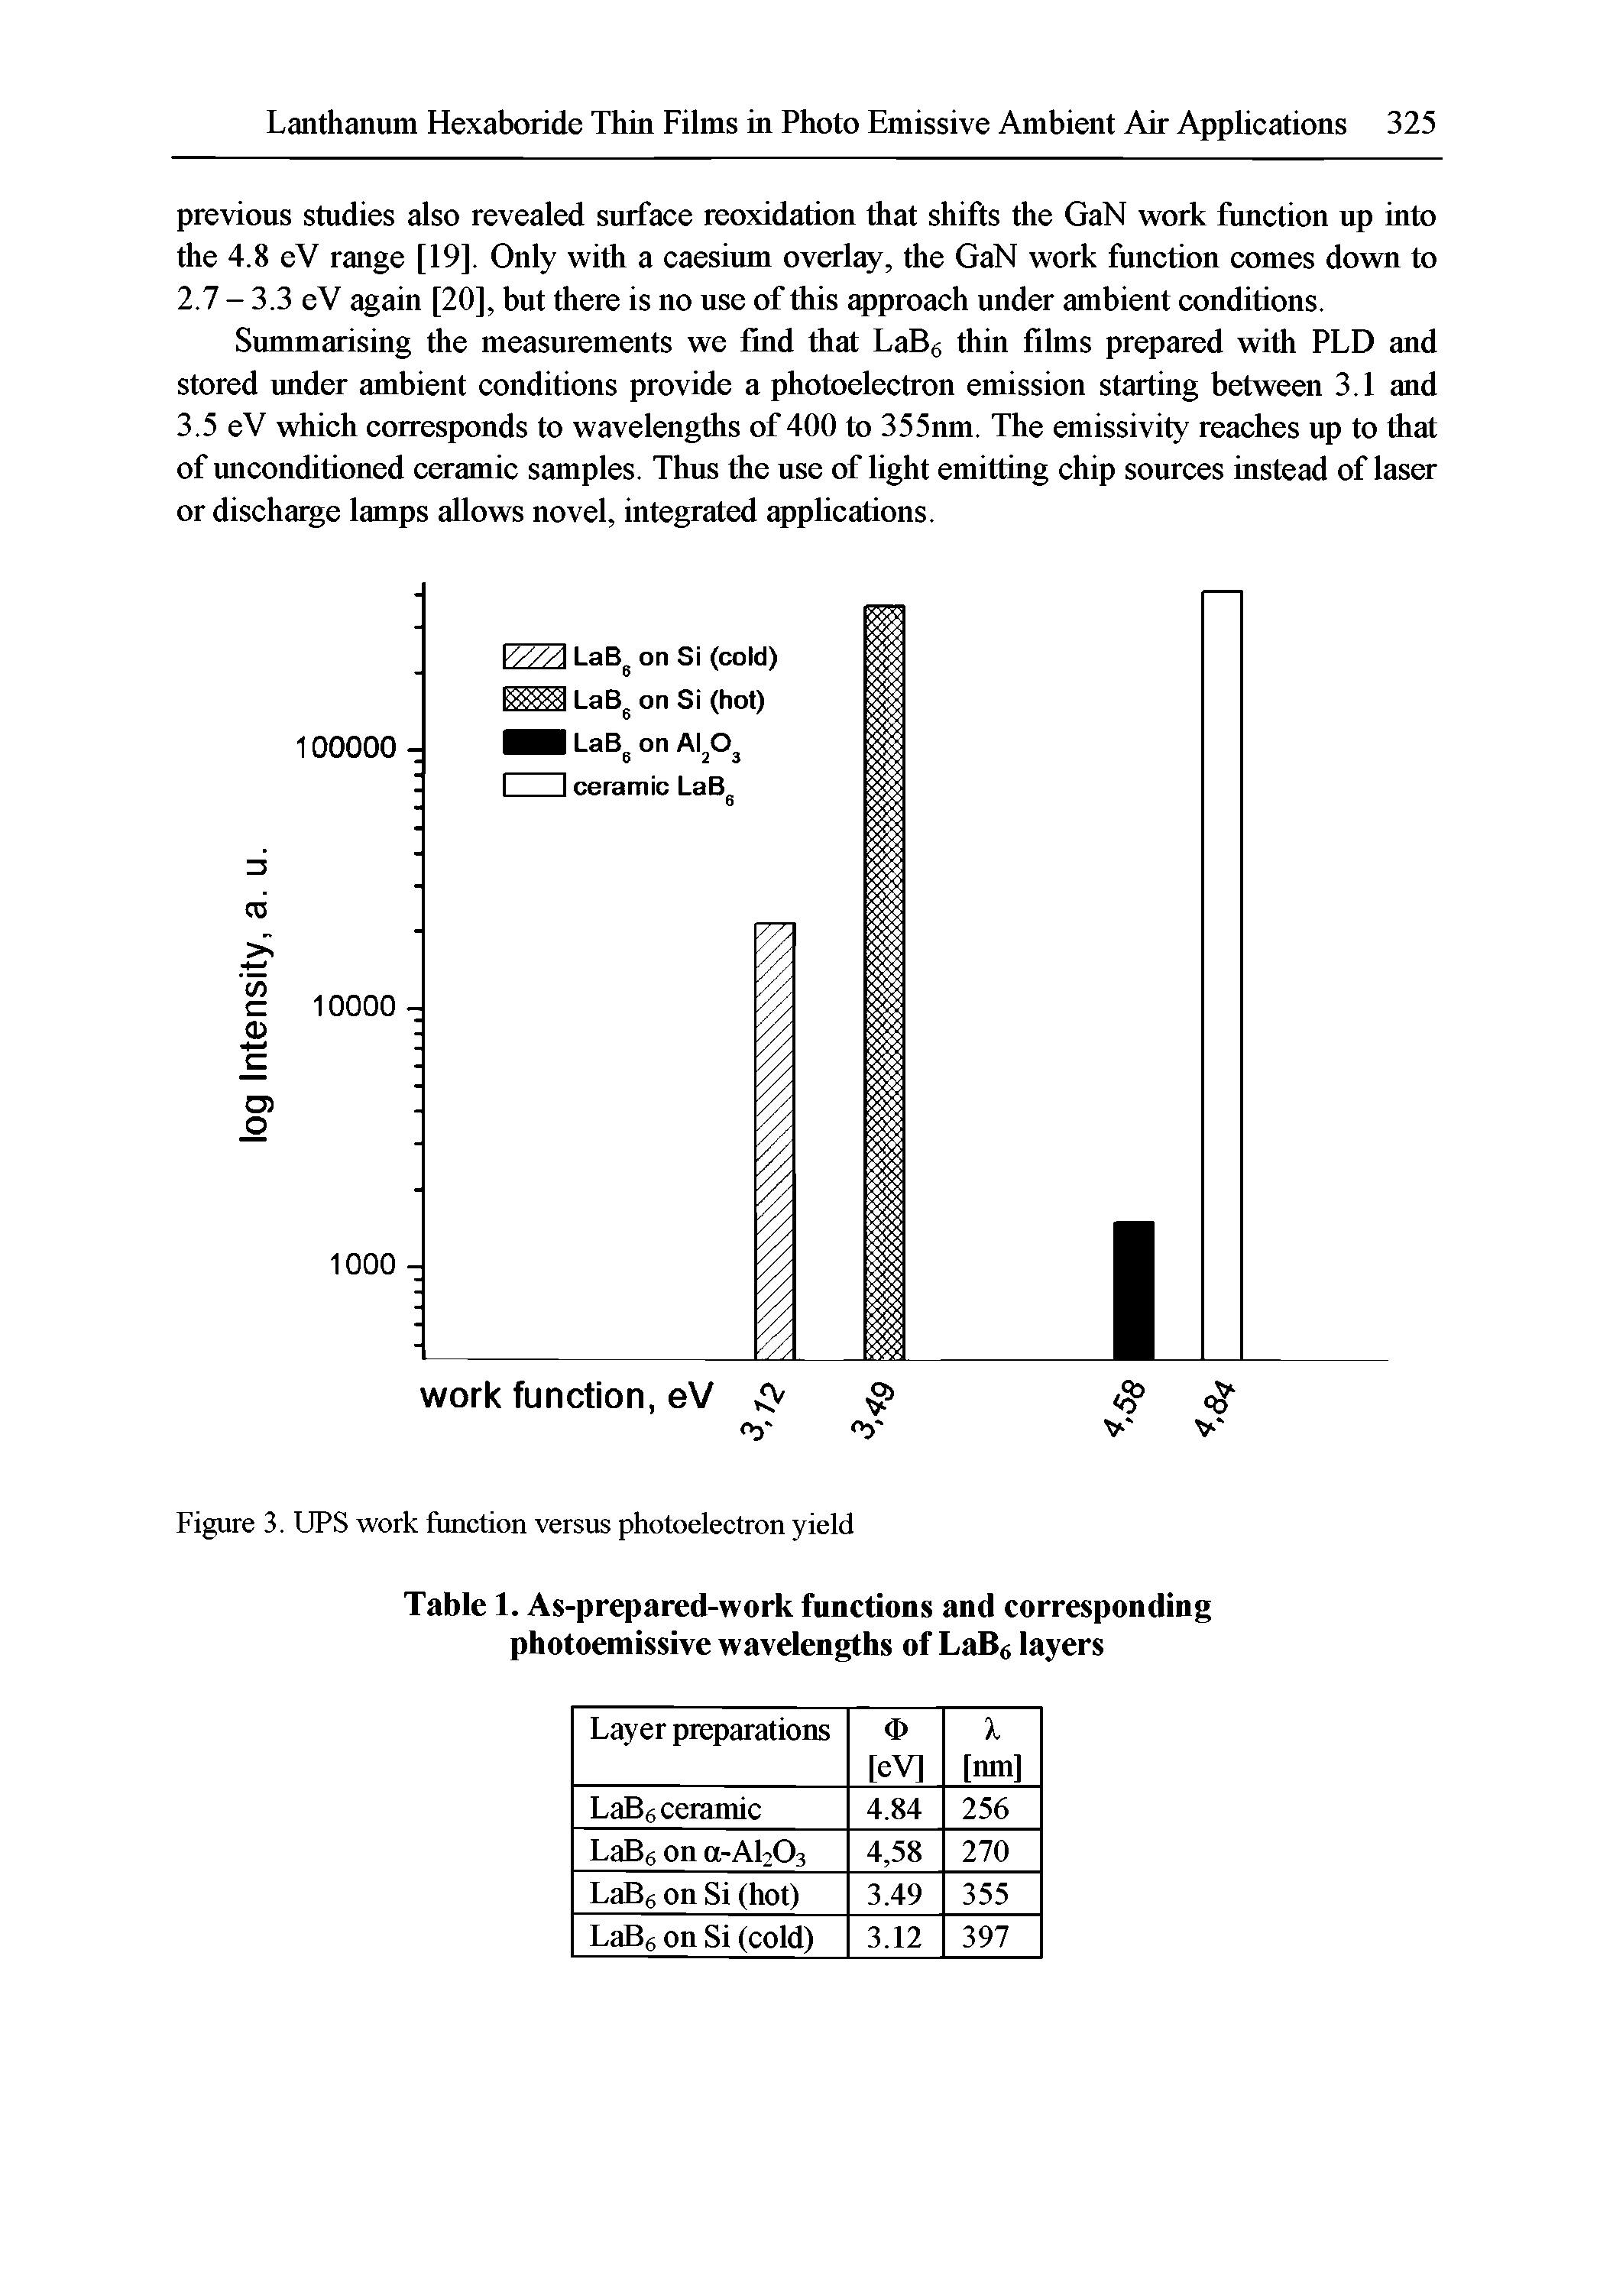 Figure 3. UPS work function versus photoelectron yield...